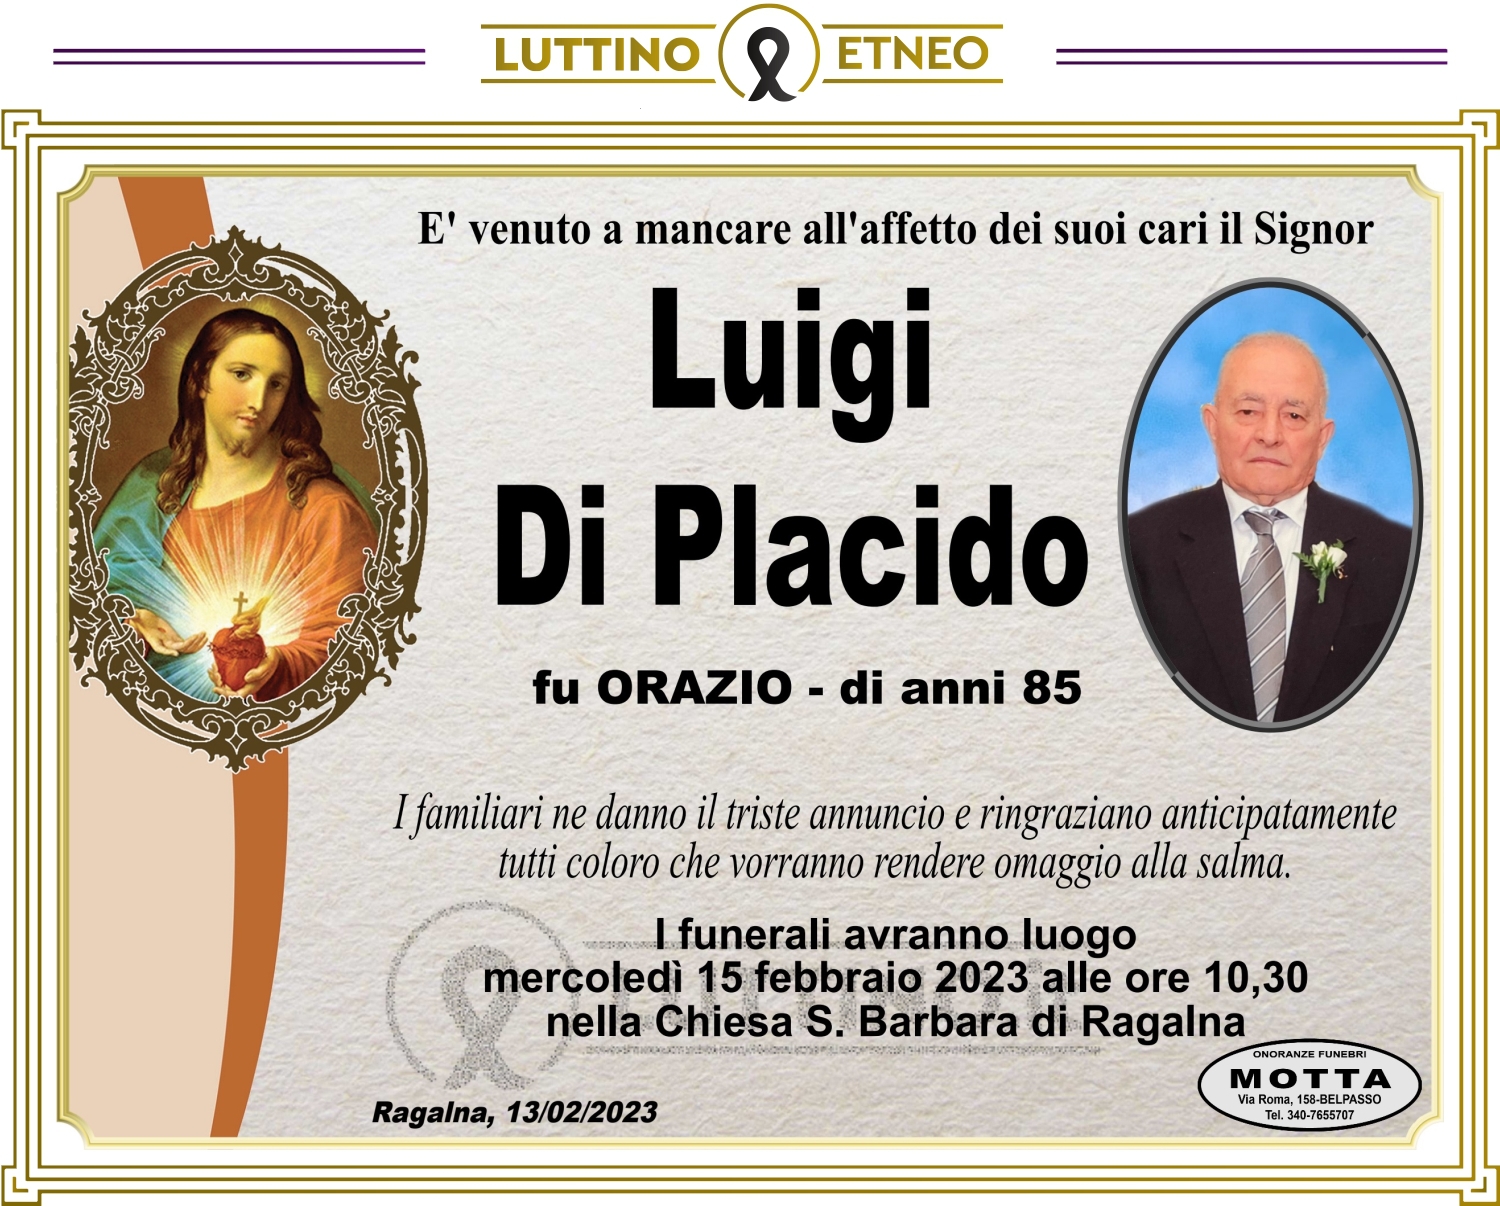 Luigi Di Placido